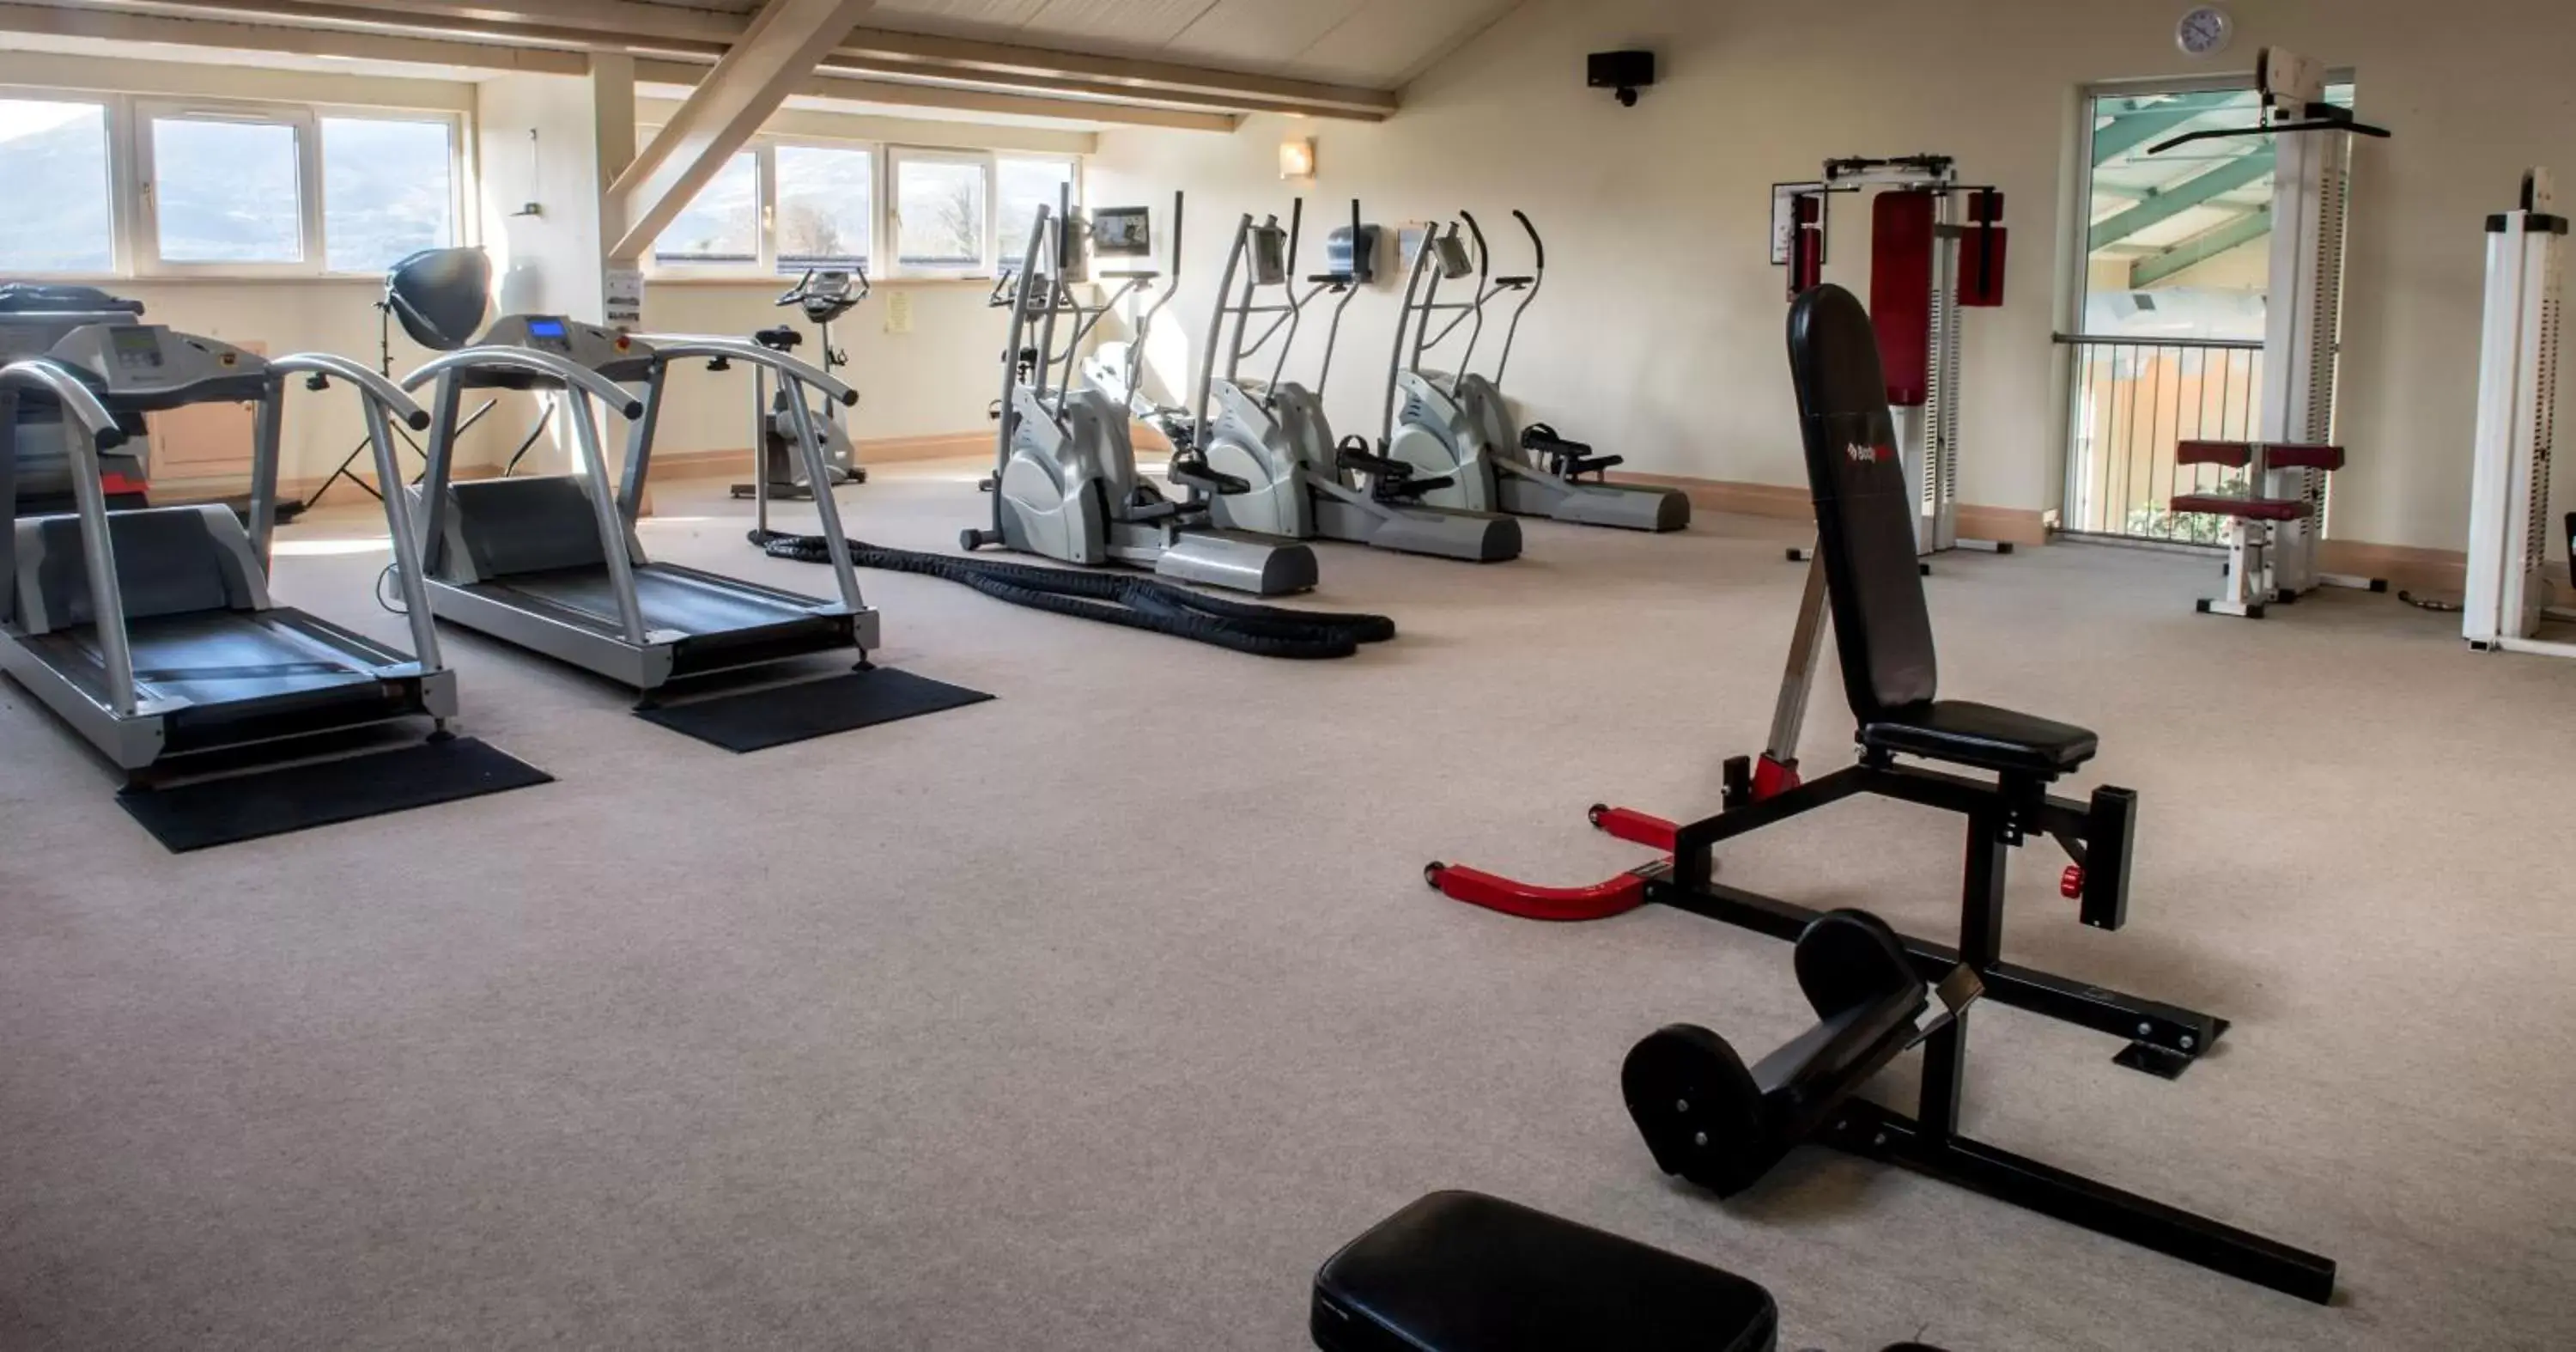 Fitness centre/facilities, Fitness Center/Facilities in Castlerosse Park Resort